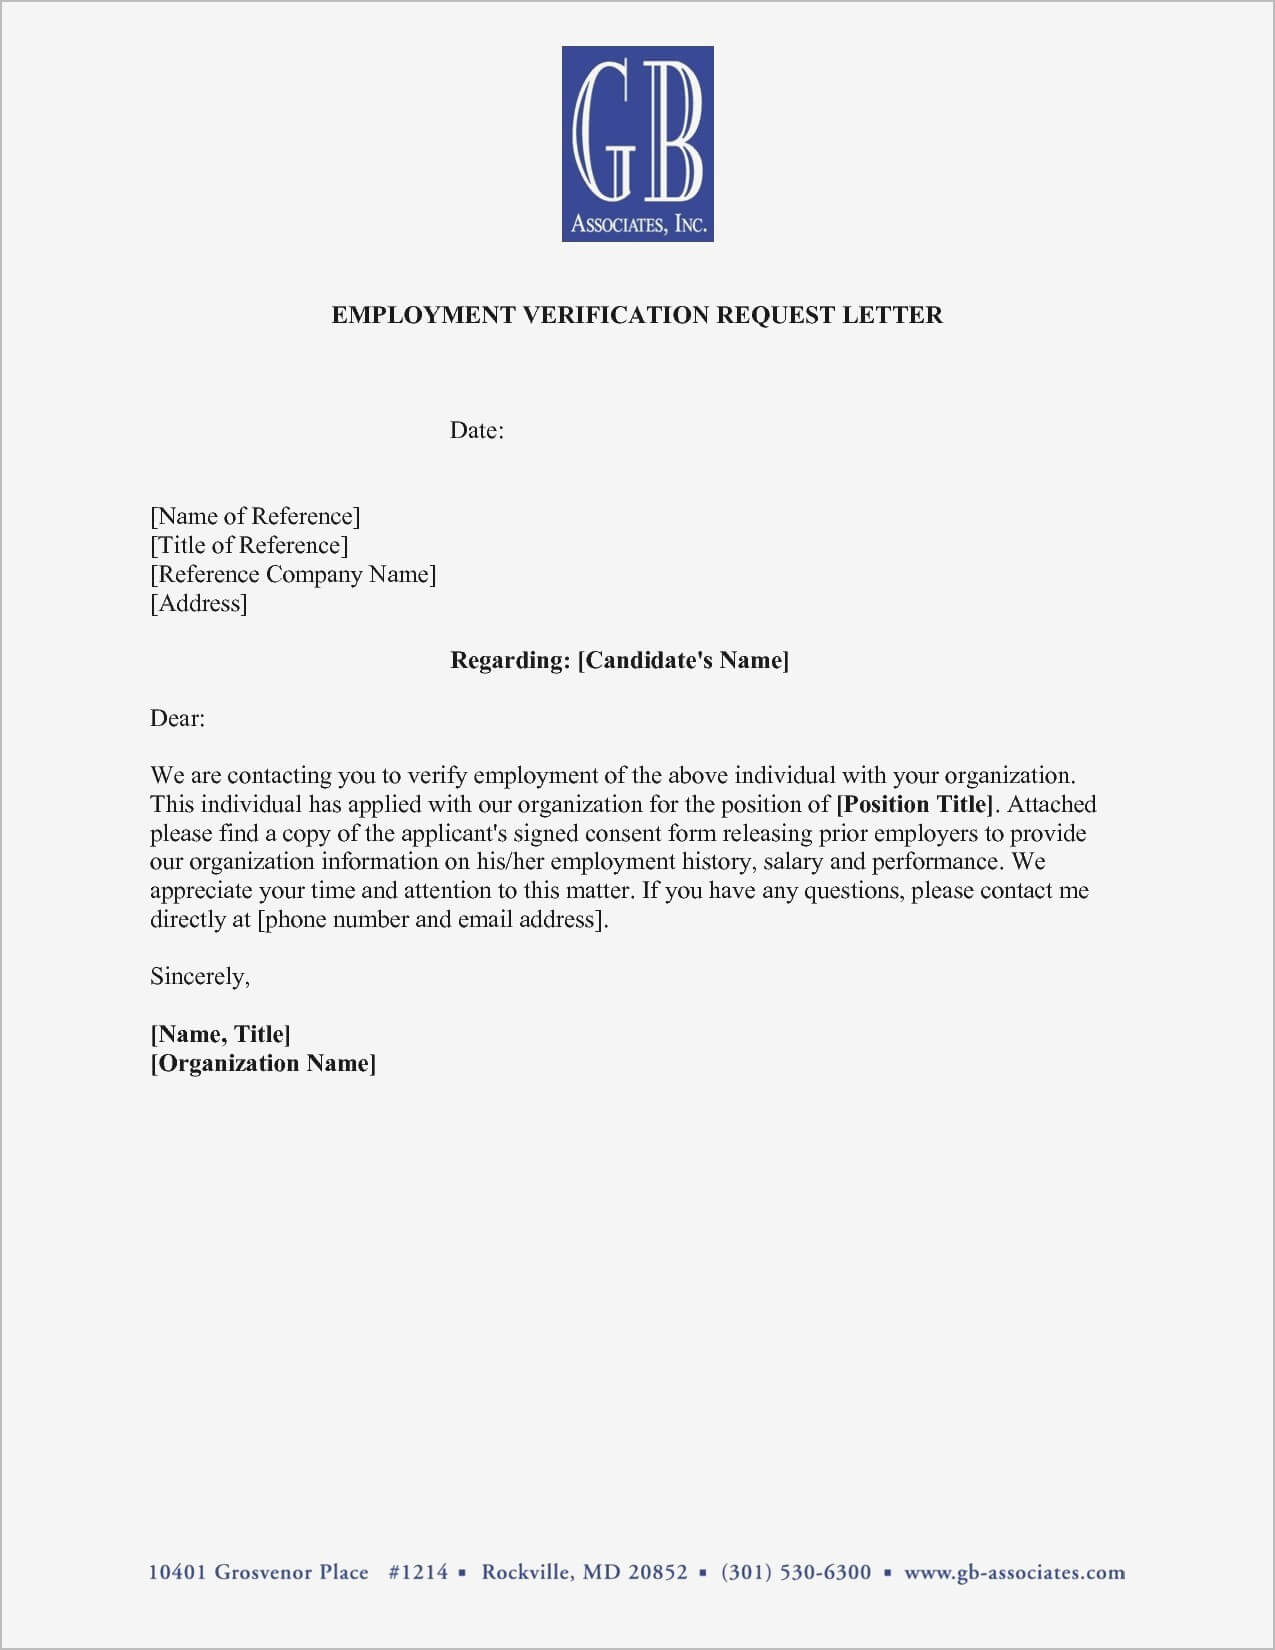 Resume ~ Phenomenal Company Letterhead Employmenton Image For Employment Verification Letter Template Word